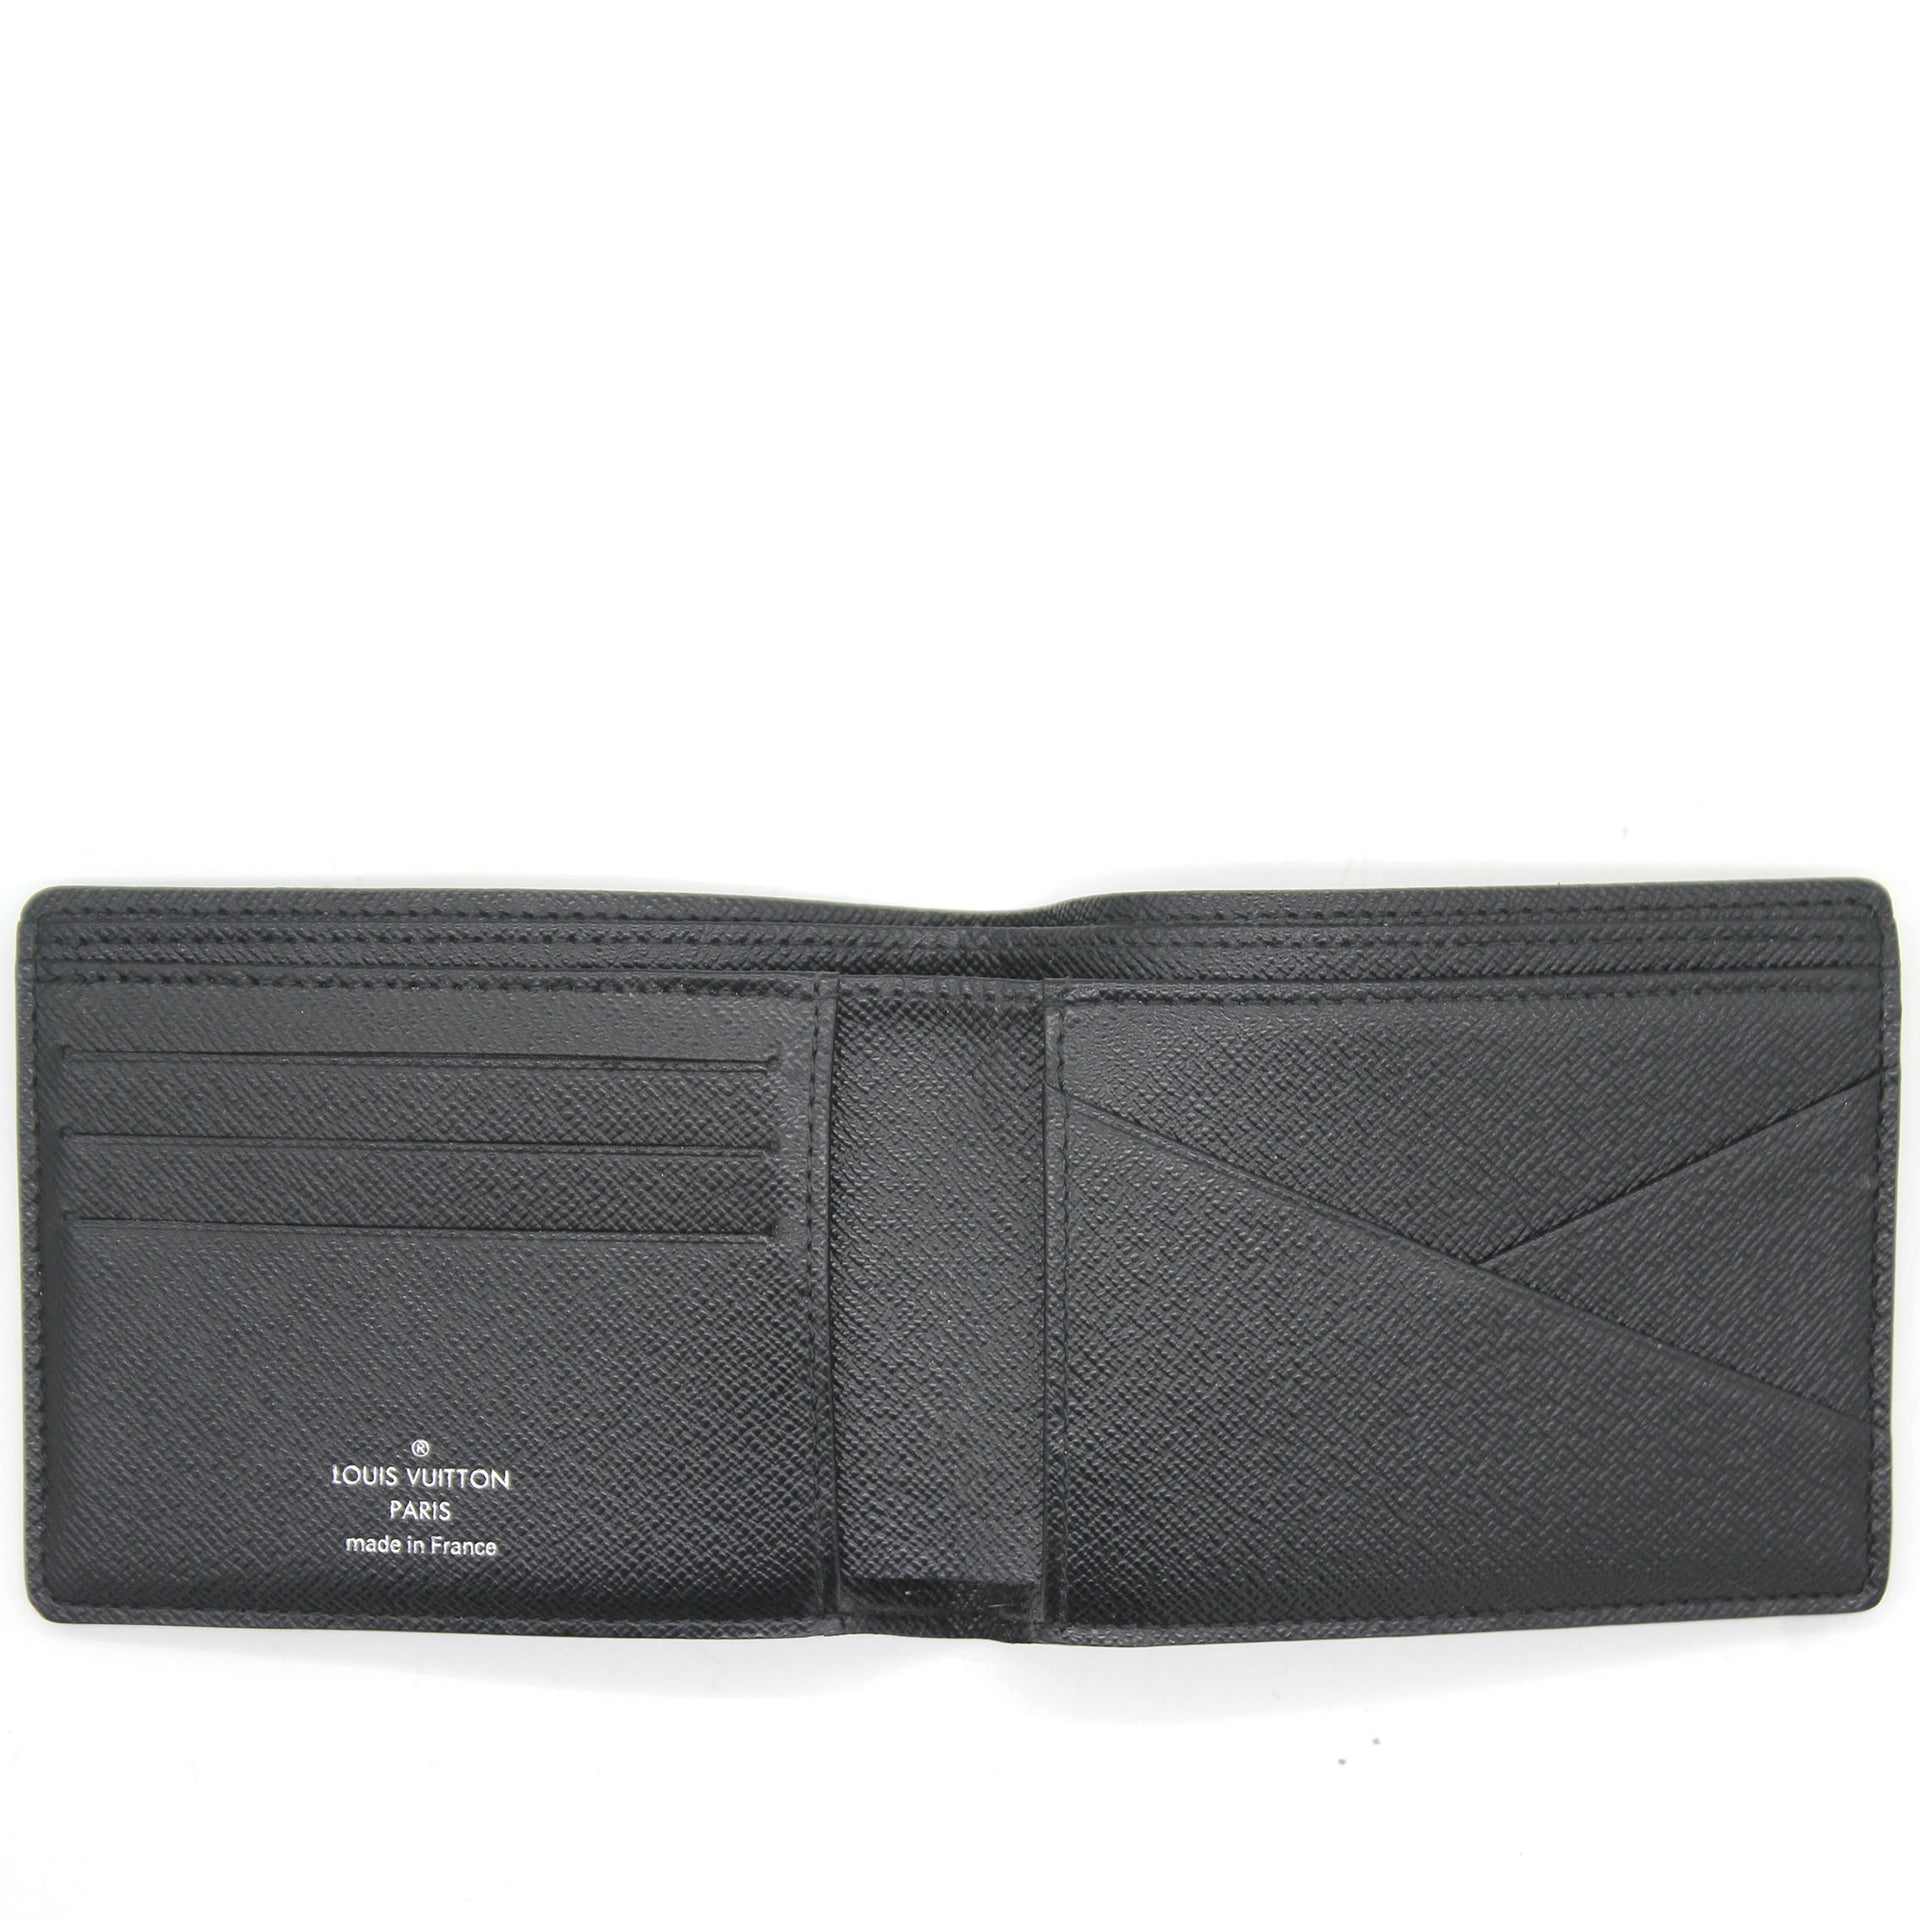 RM1850 Excellent condition multiple wallet damier graphite Code